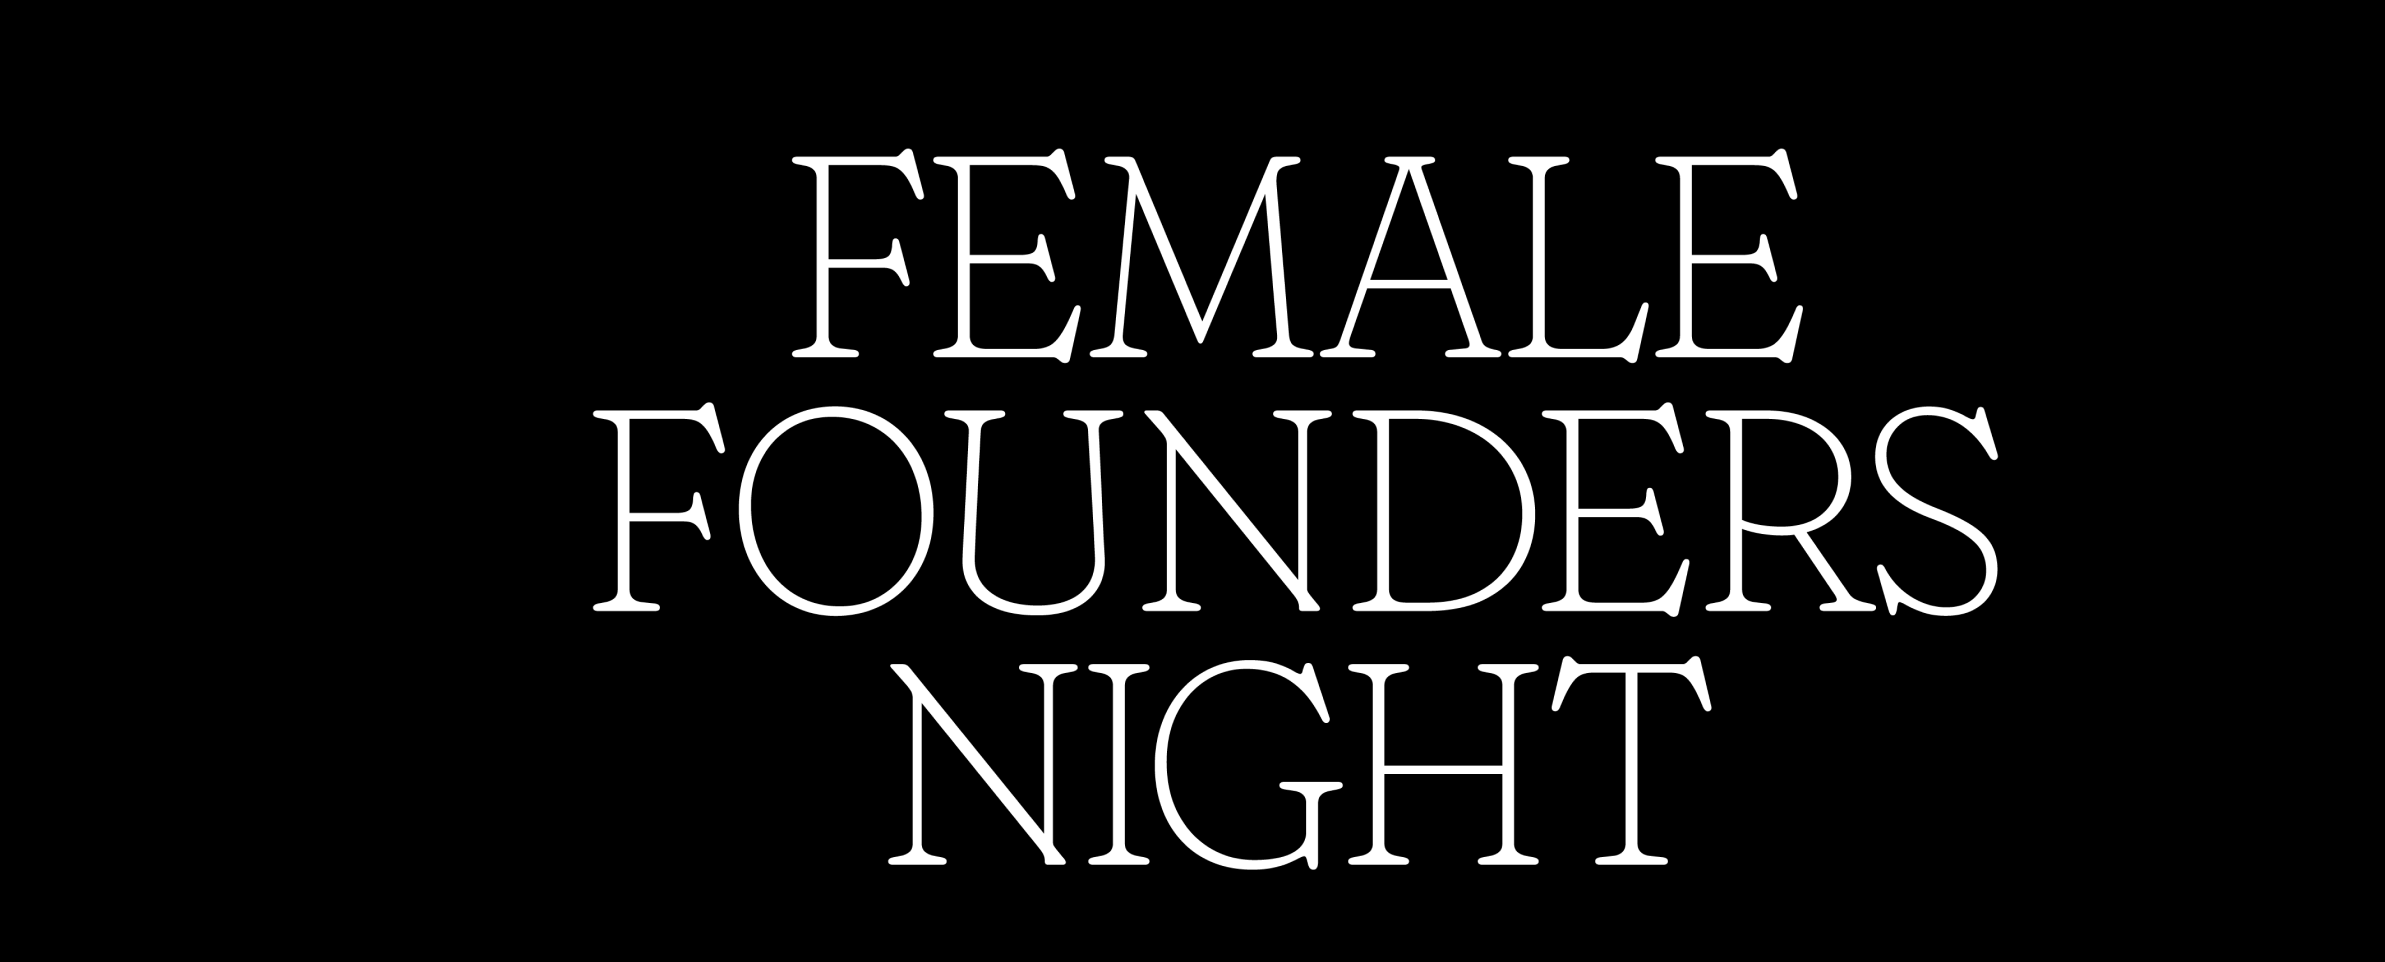 NetworkP Female founders night